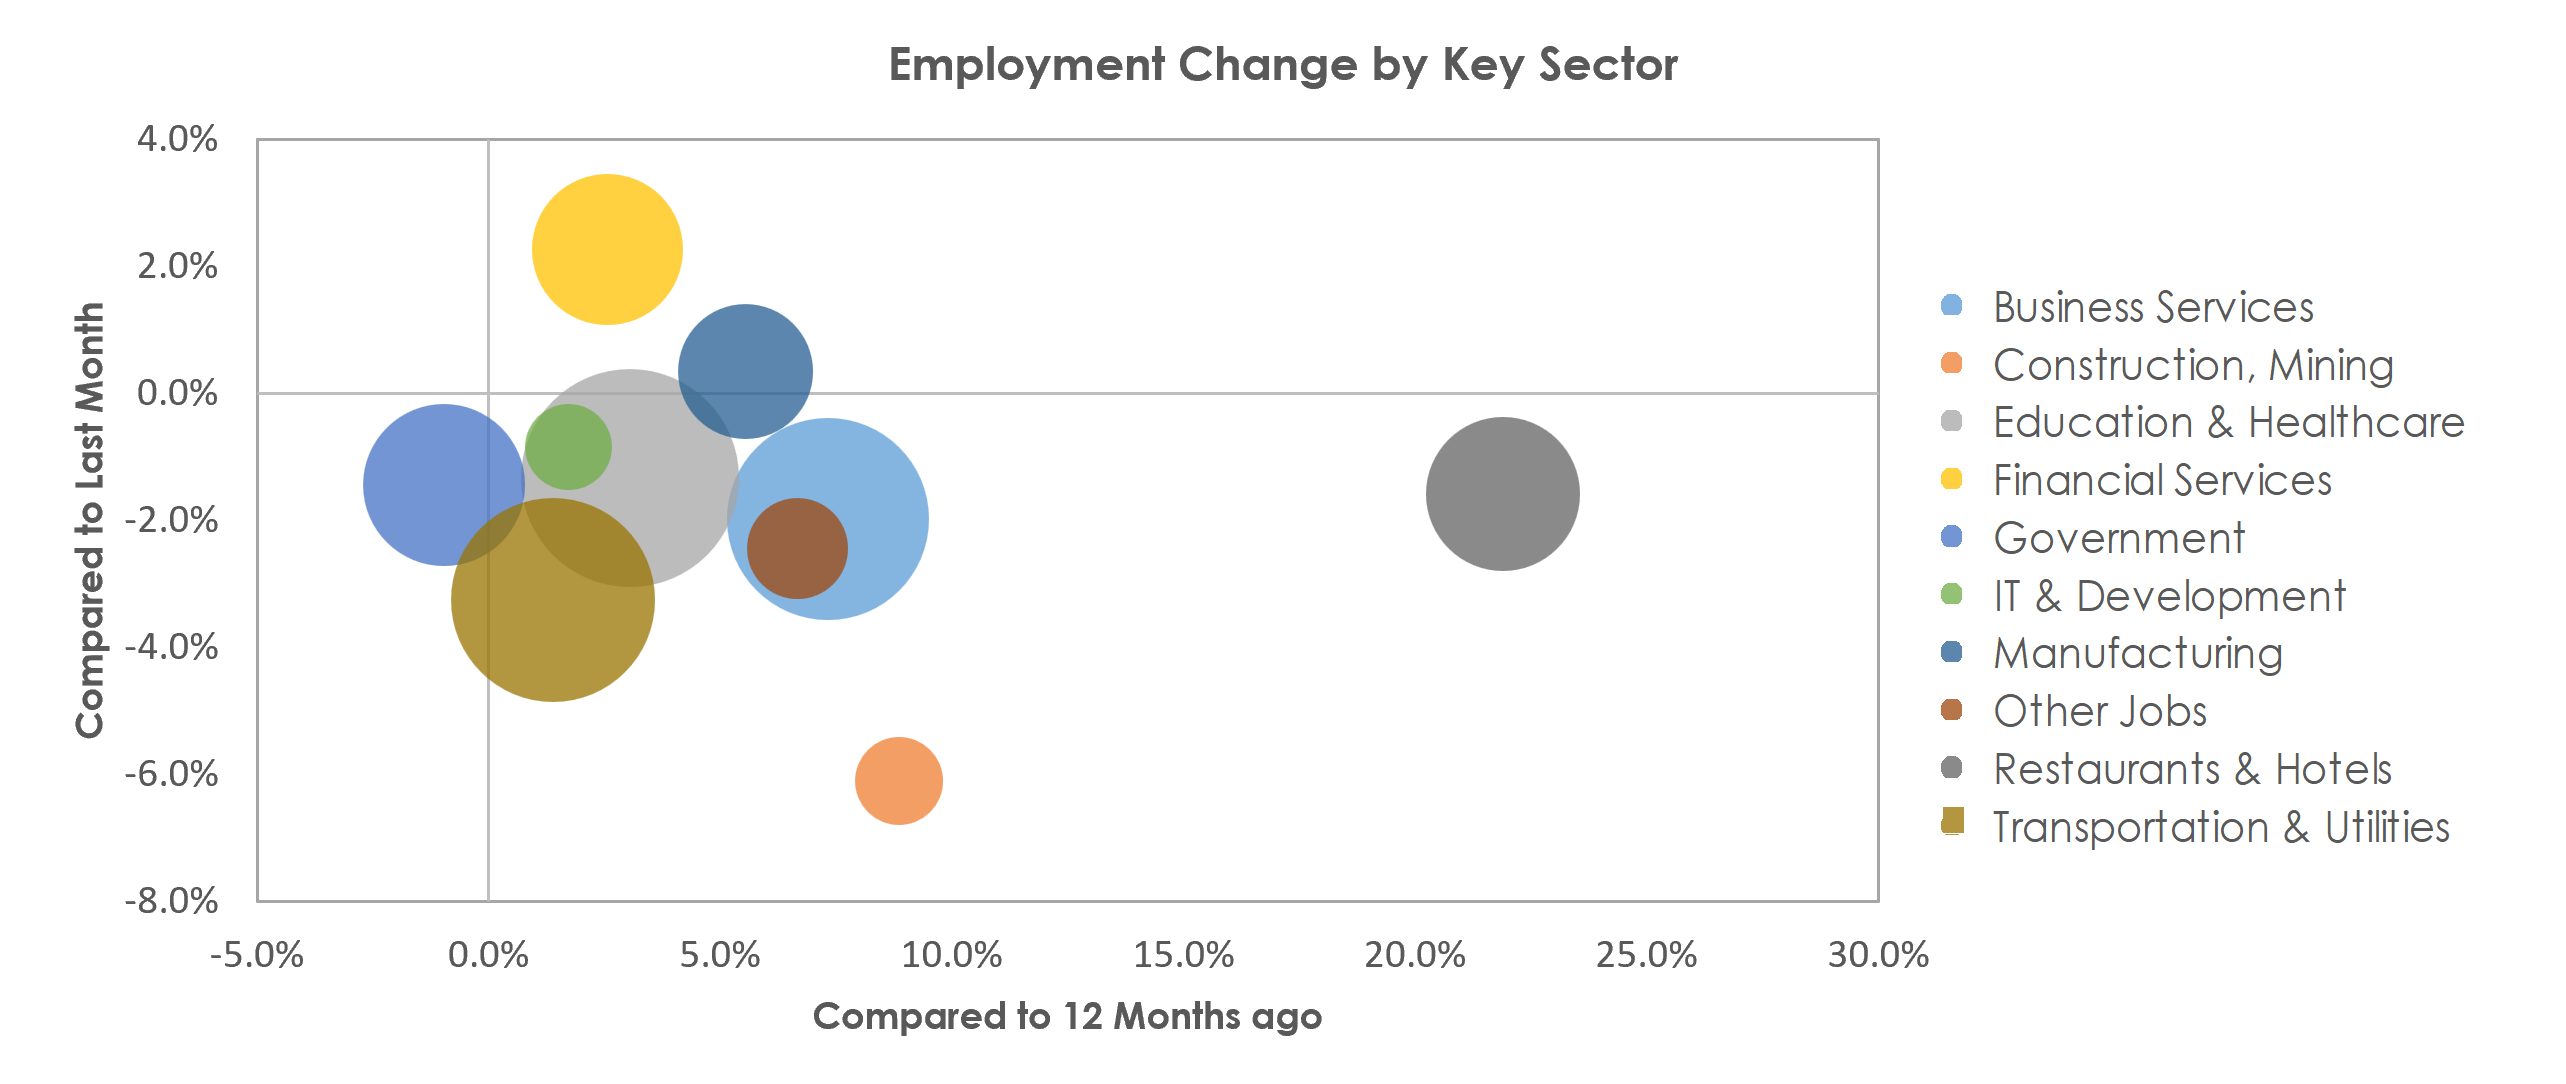 Bridgeport-Stamford-Norwalk, CT Unemployment by Industry January 2022